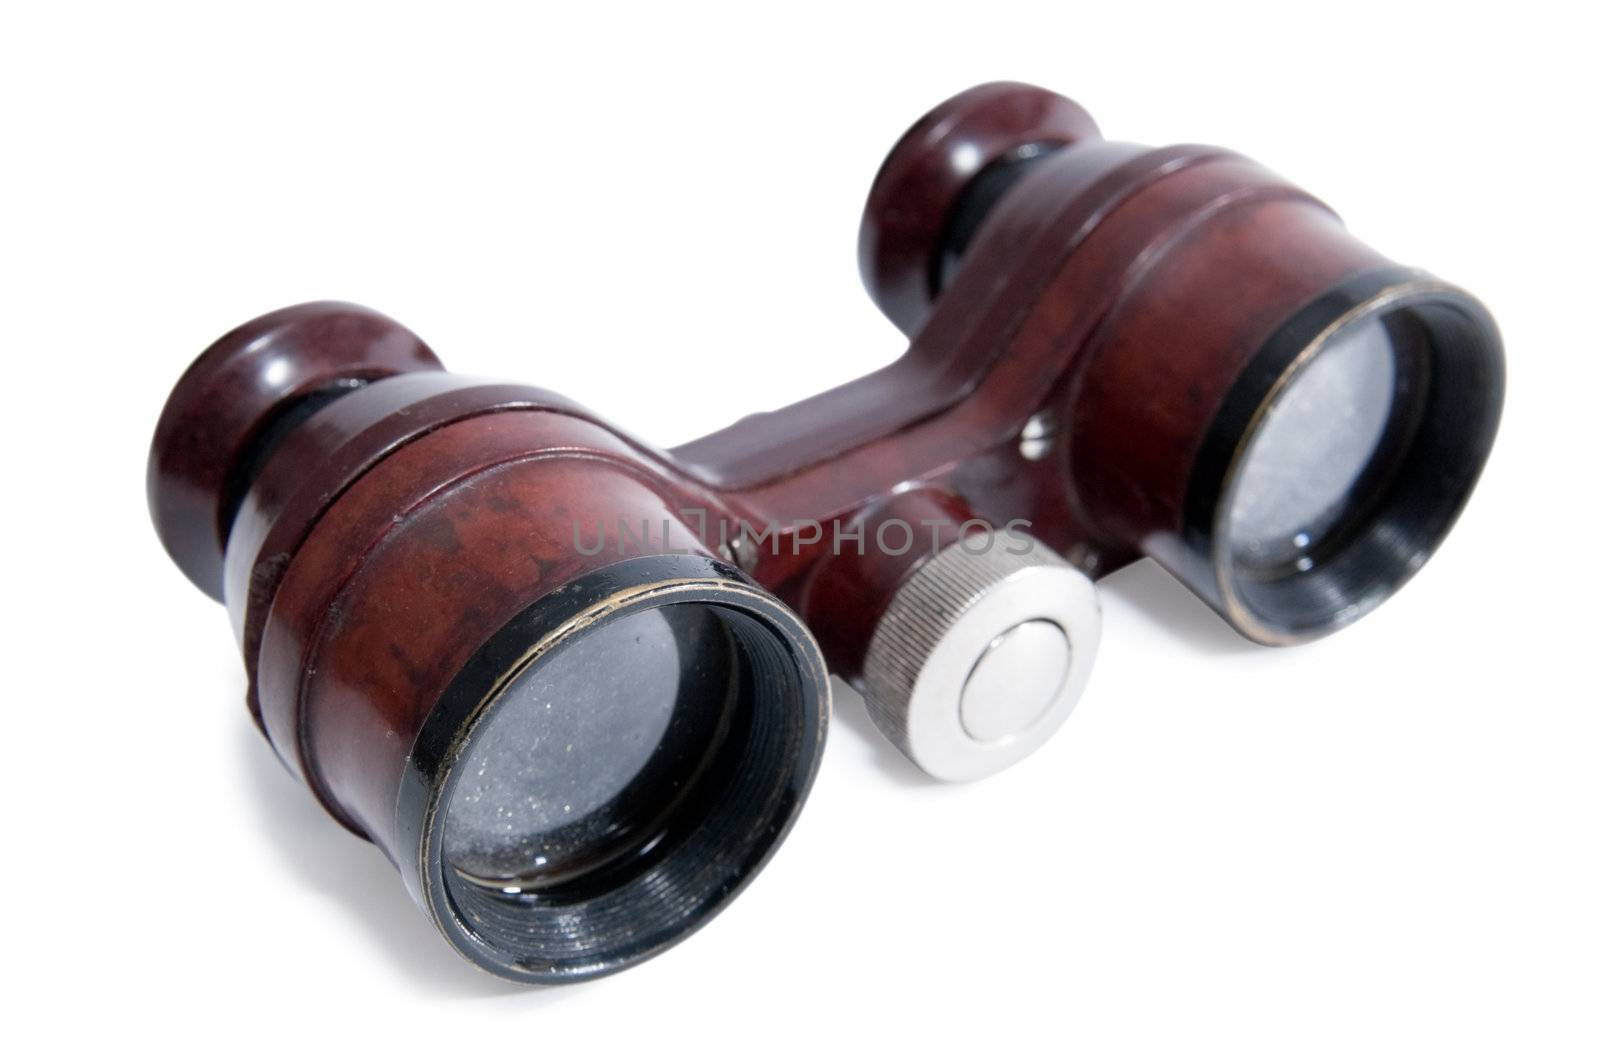 Opera binoculars by andyphoto